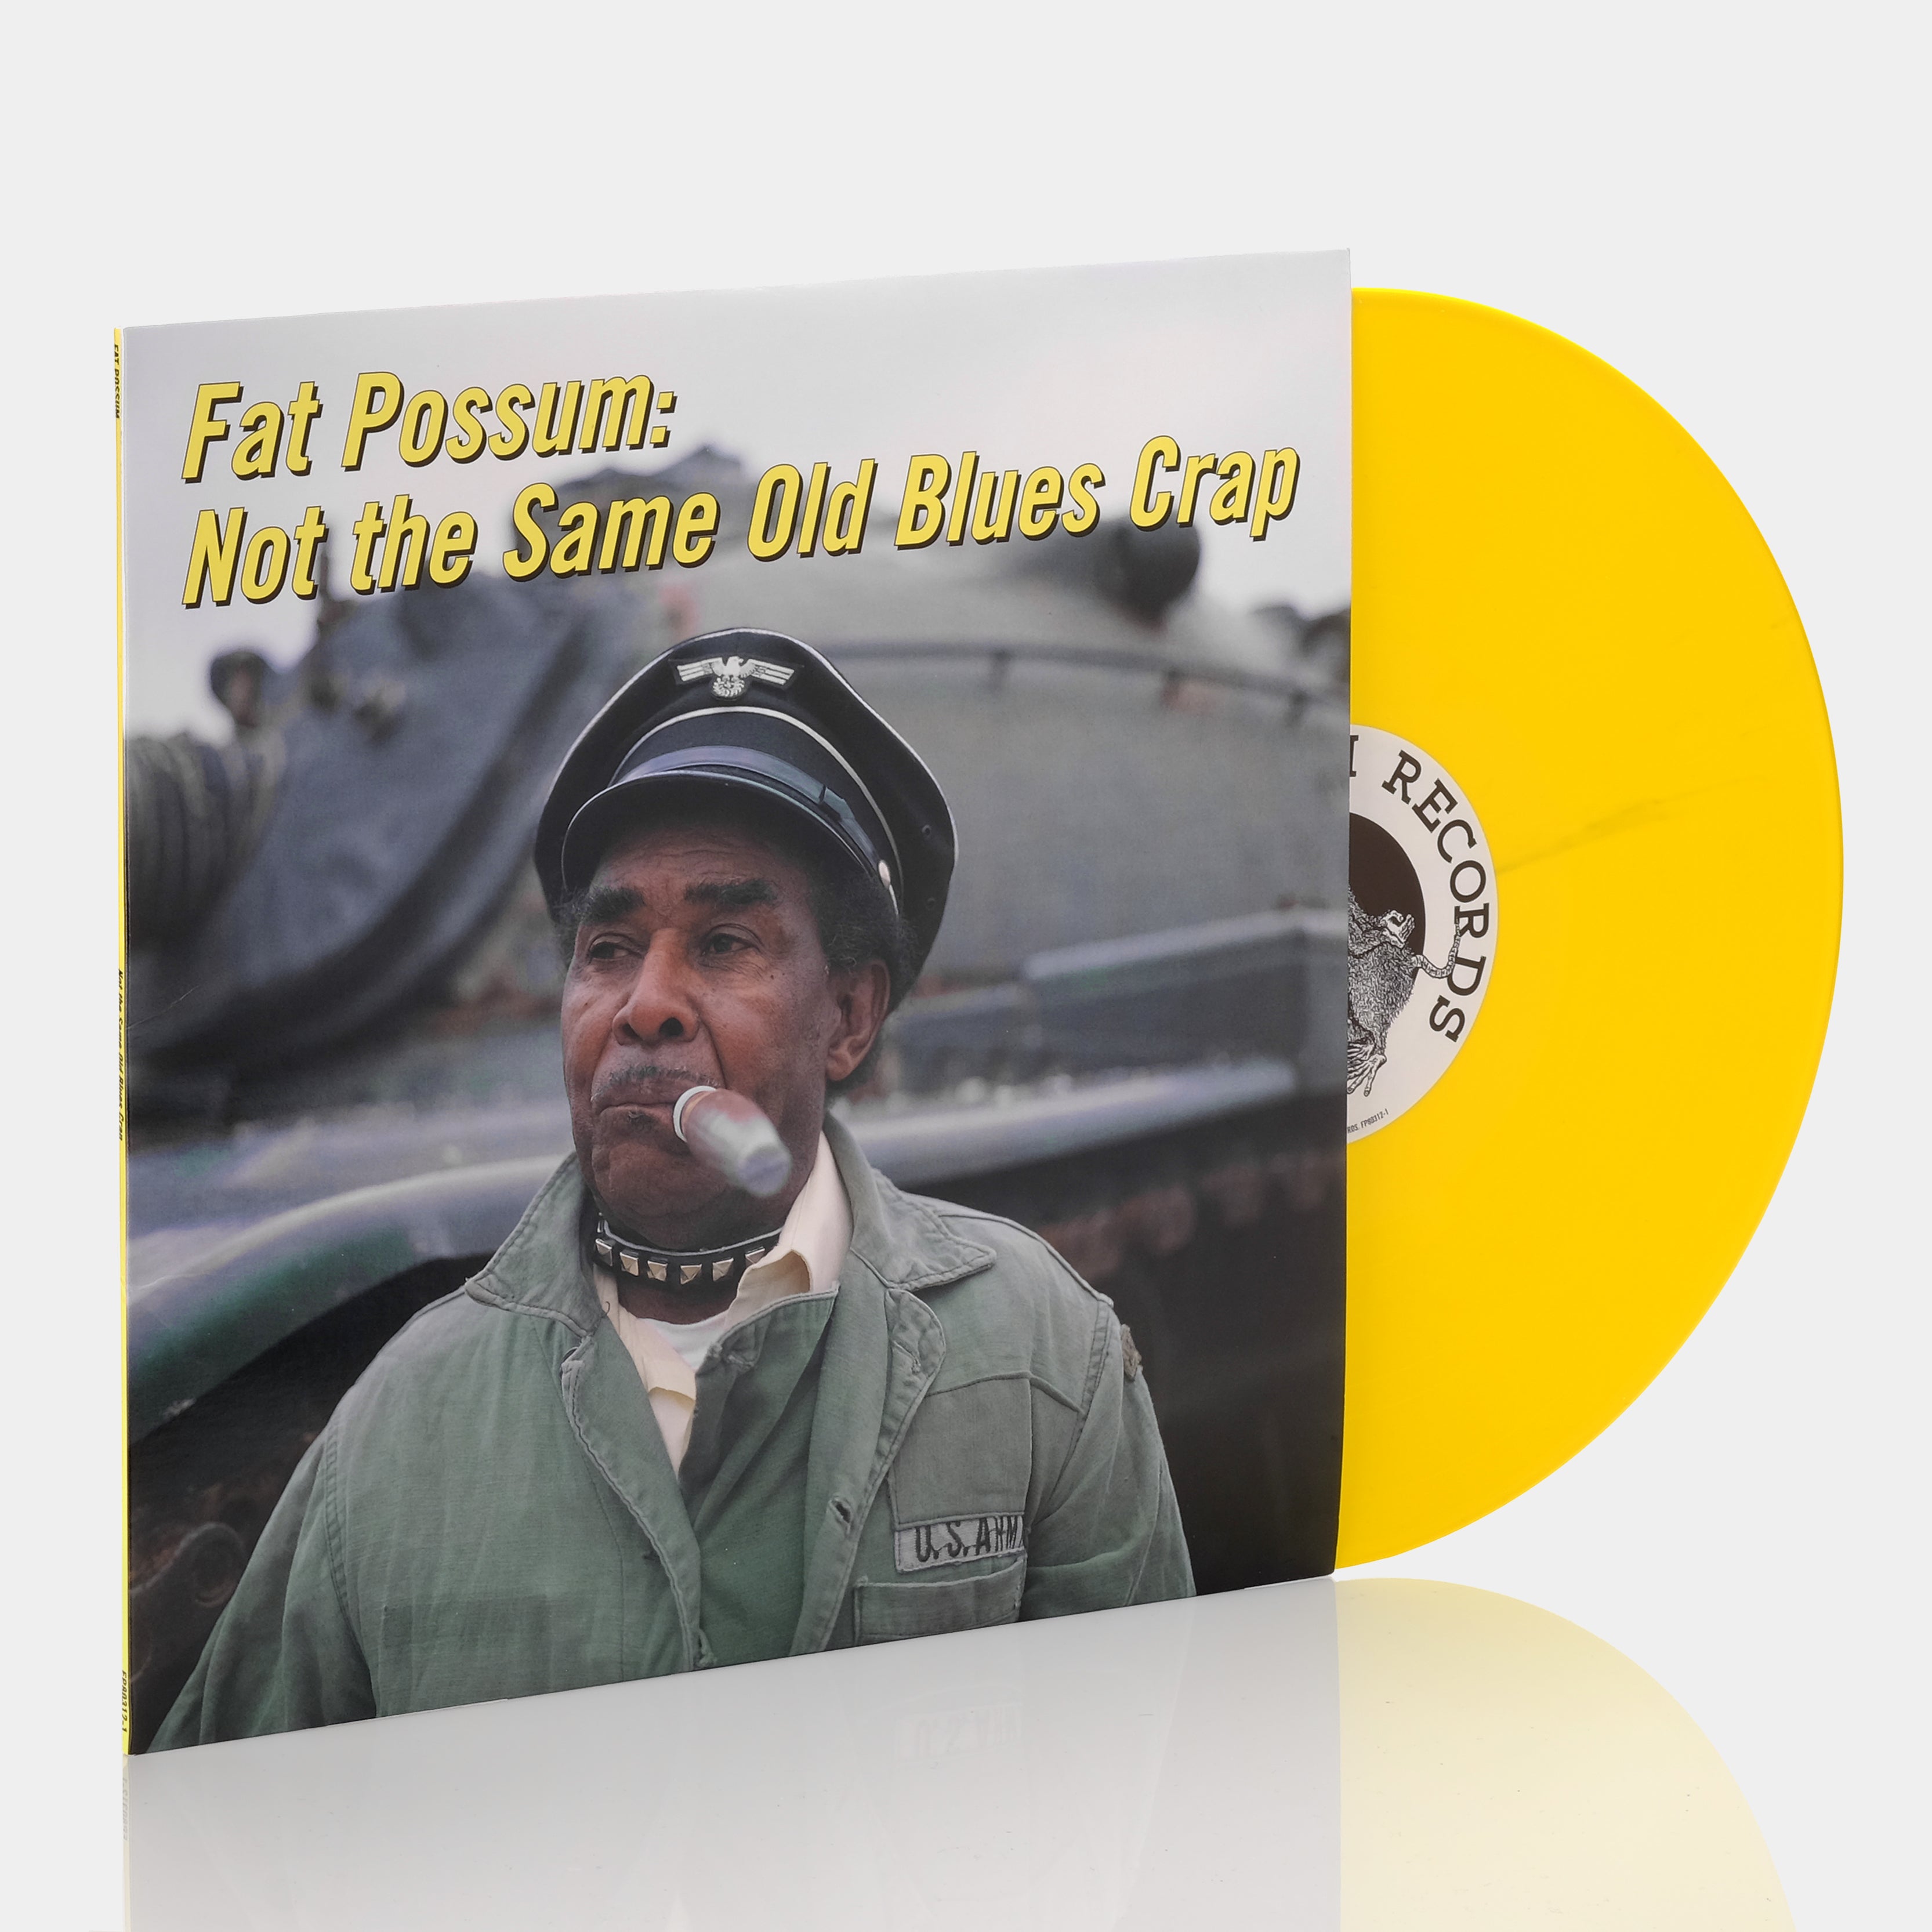 Fat Possum: Not The Same Old Blues Crap LP Yellow Vinyl Record